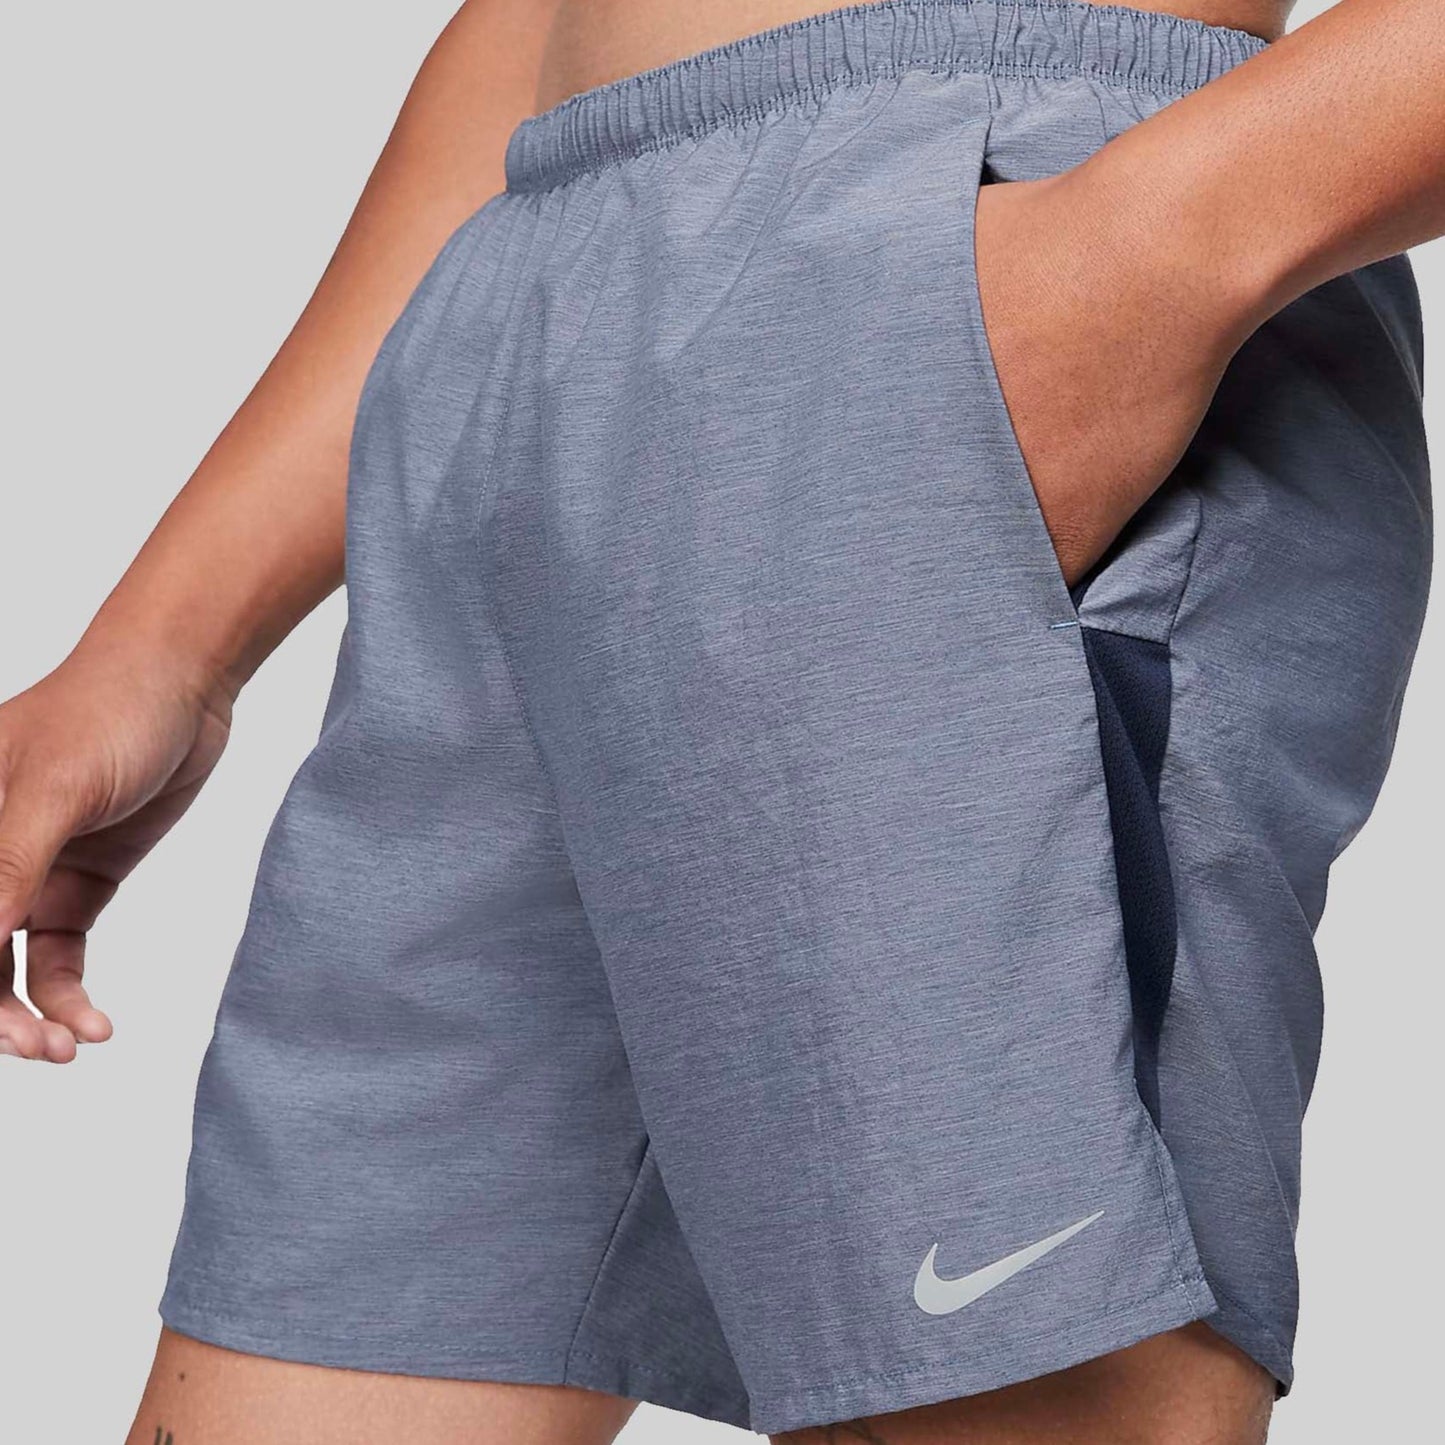 Nike Challenger 2.0 Shorts